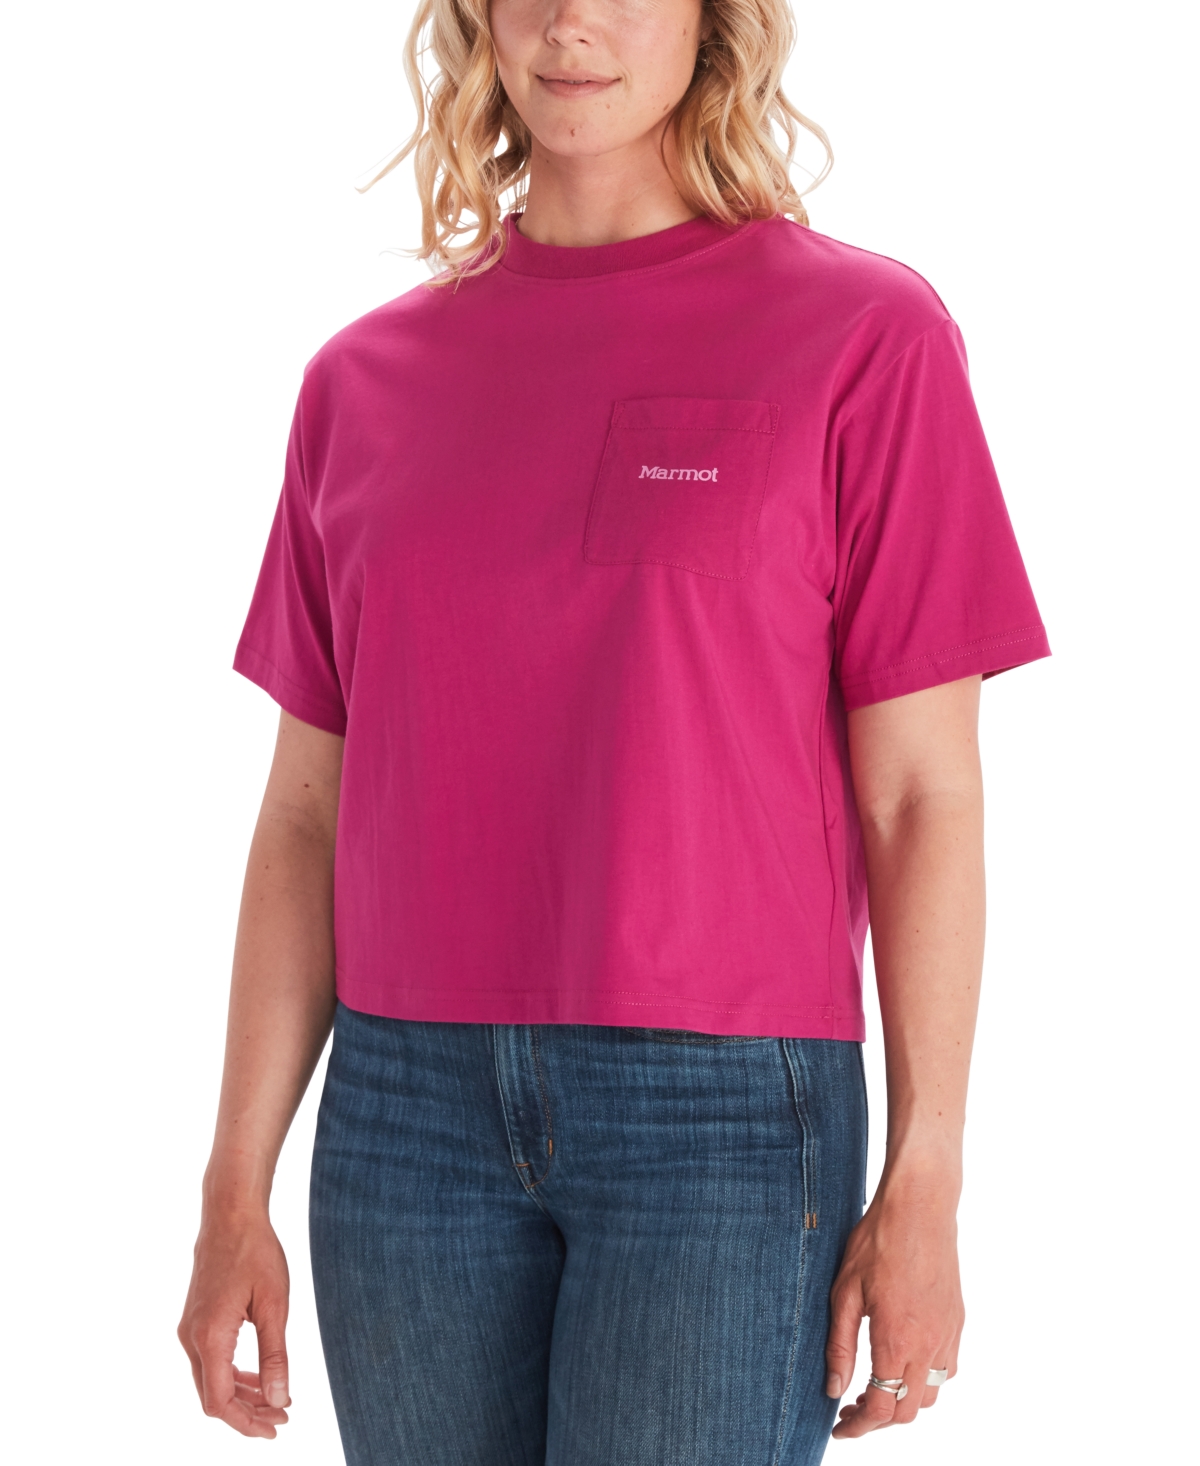 Marmot Women's Boxy Logo Cotton T-Shirt